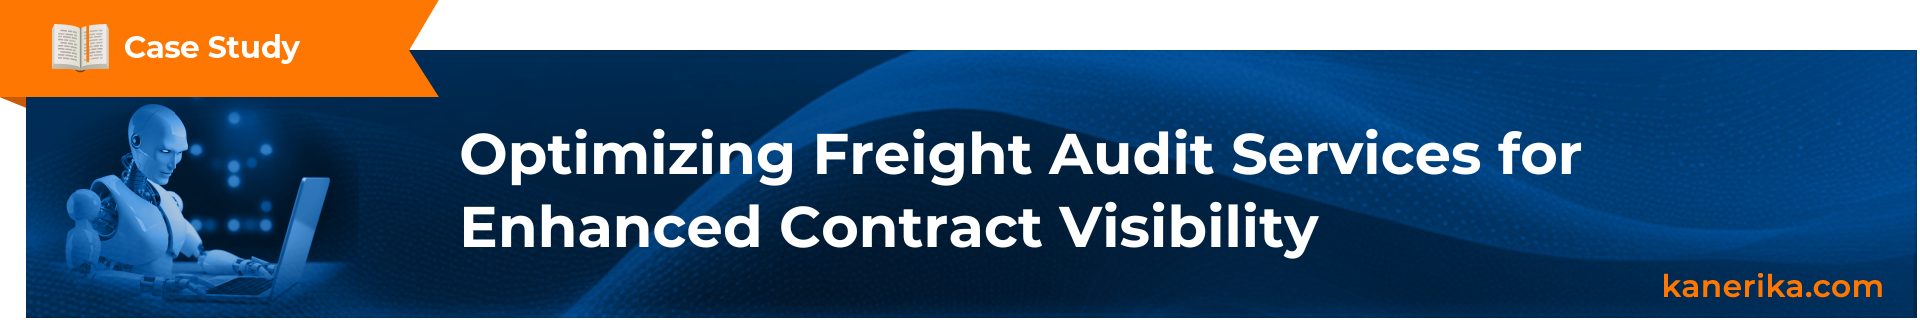 case study freight audit